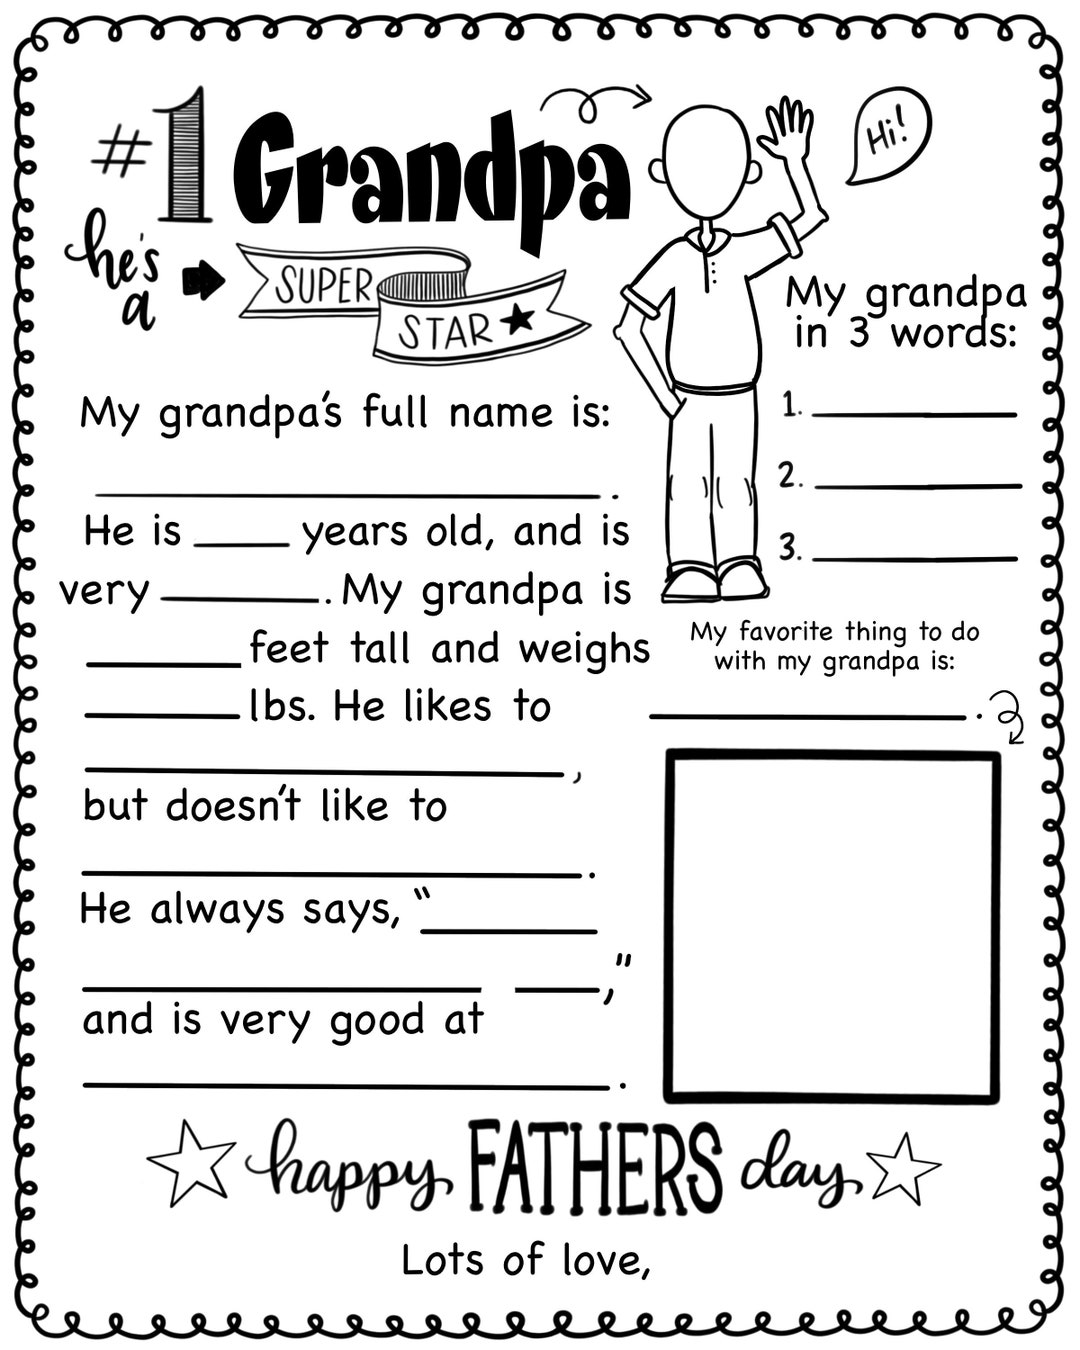 fathers-day-grandpa-kid-questionnaire-etsy-australia